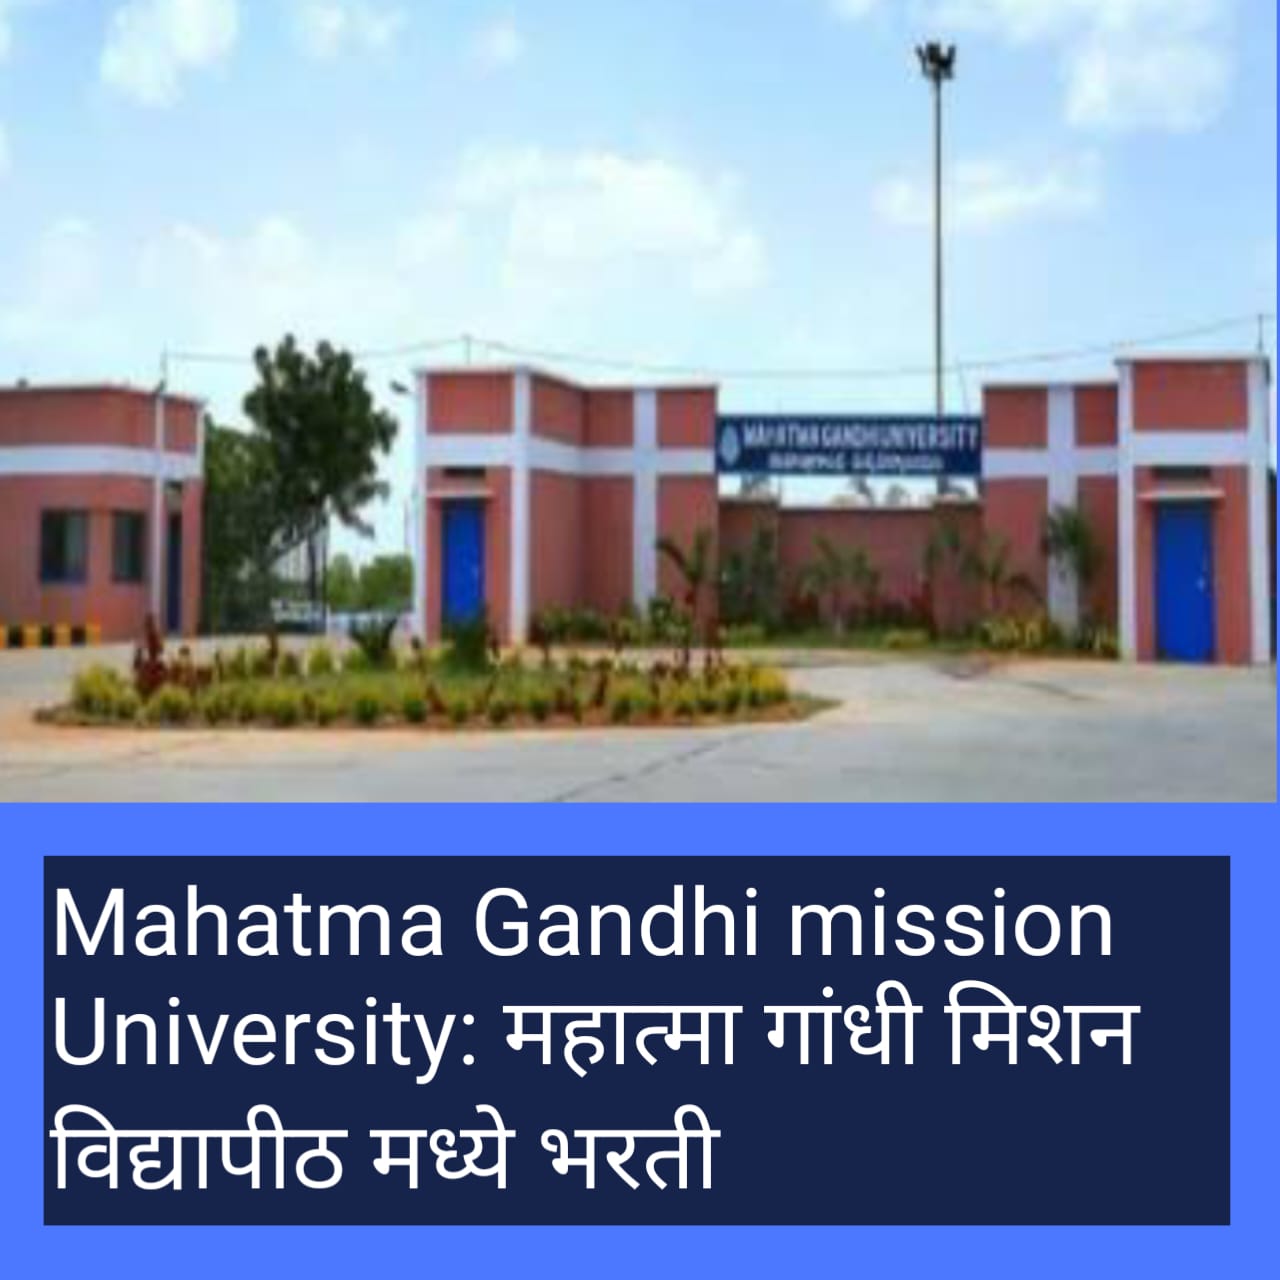 Mahatma Gandhi mission University